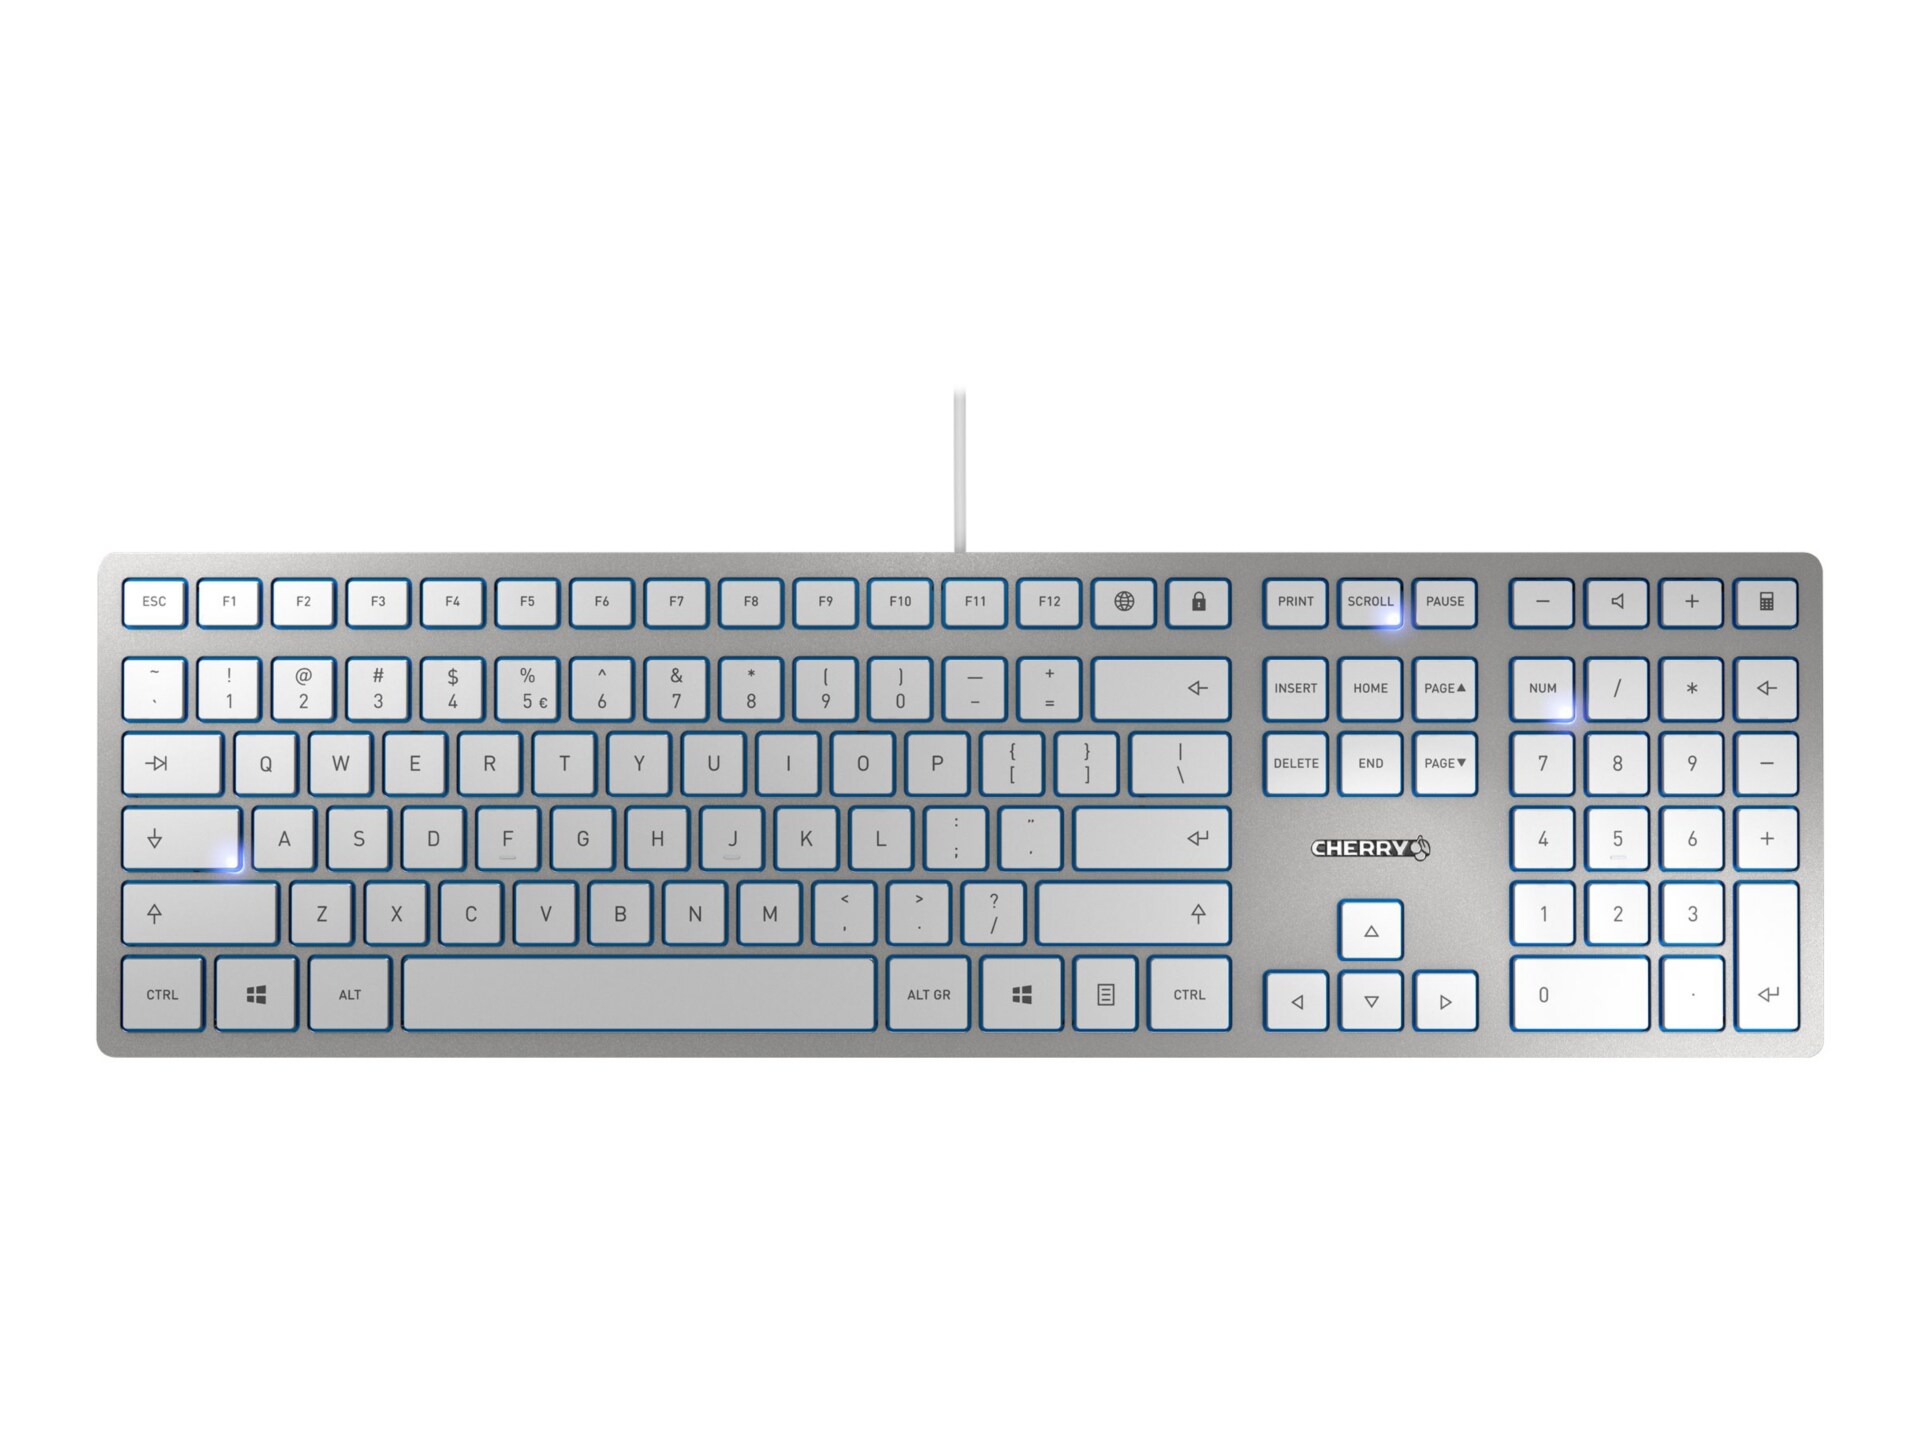 CHERRY KC 6000 SLIM Keyboard